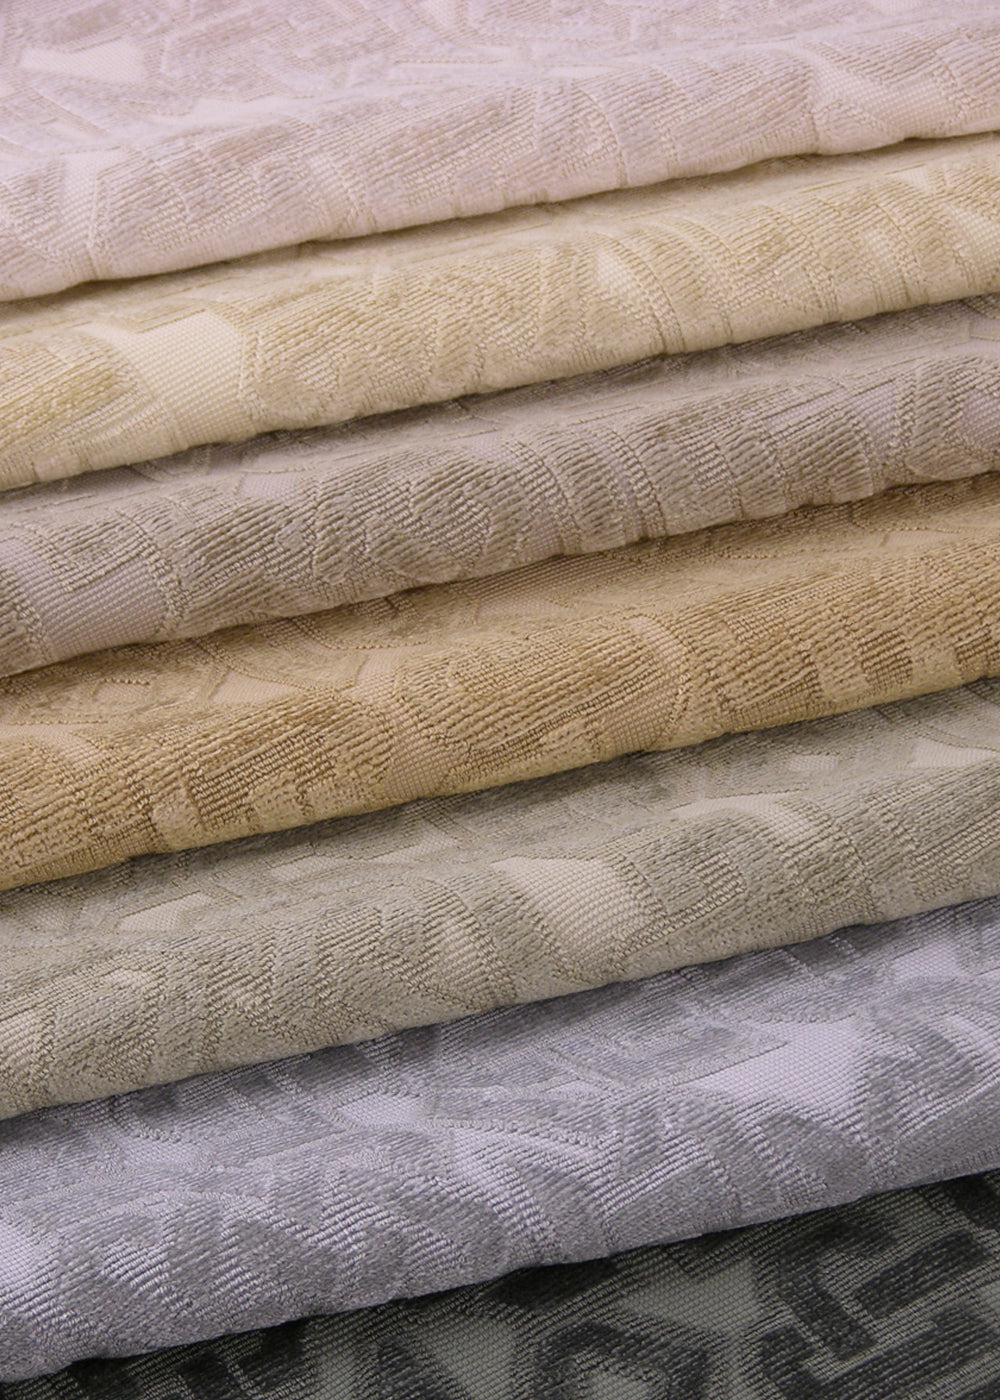 a stack of velvet fabrics with a raised geometric lattice design